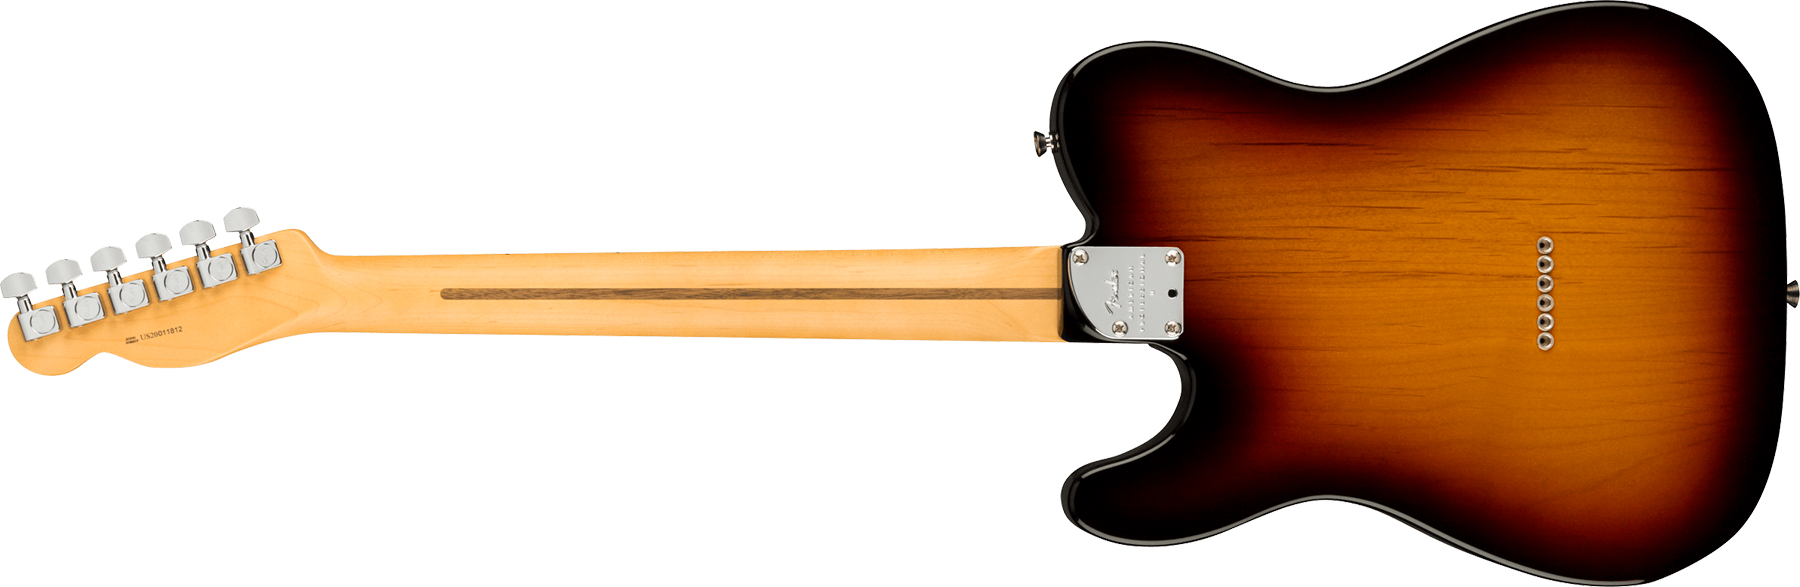 Fender Tele American Professional Ii Usa Mn - 3-color Sunburst - Guitare Électrique Forme Tel - Variation 1